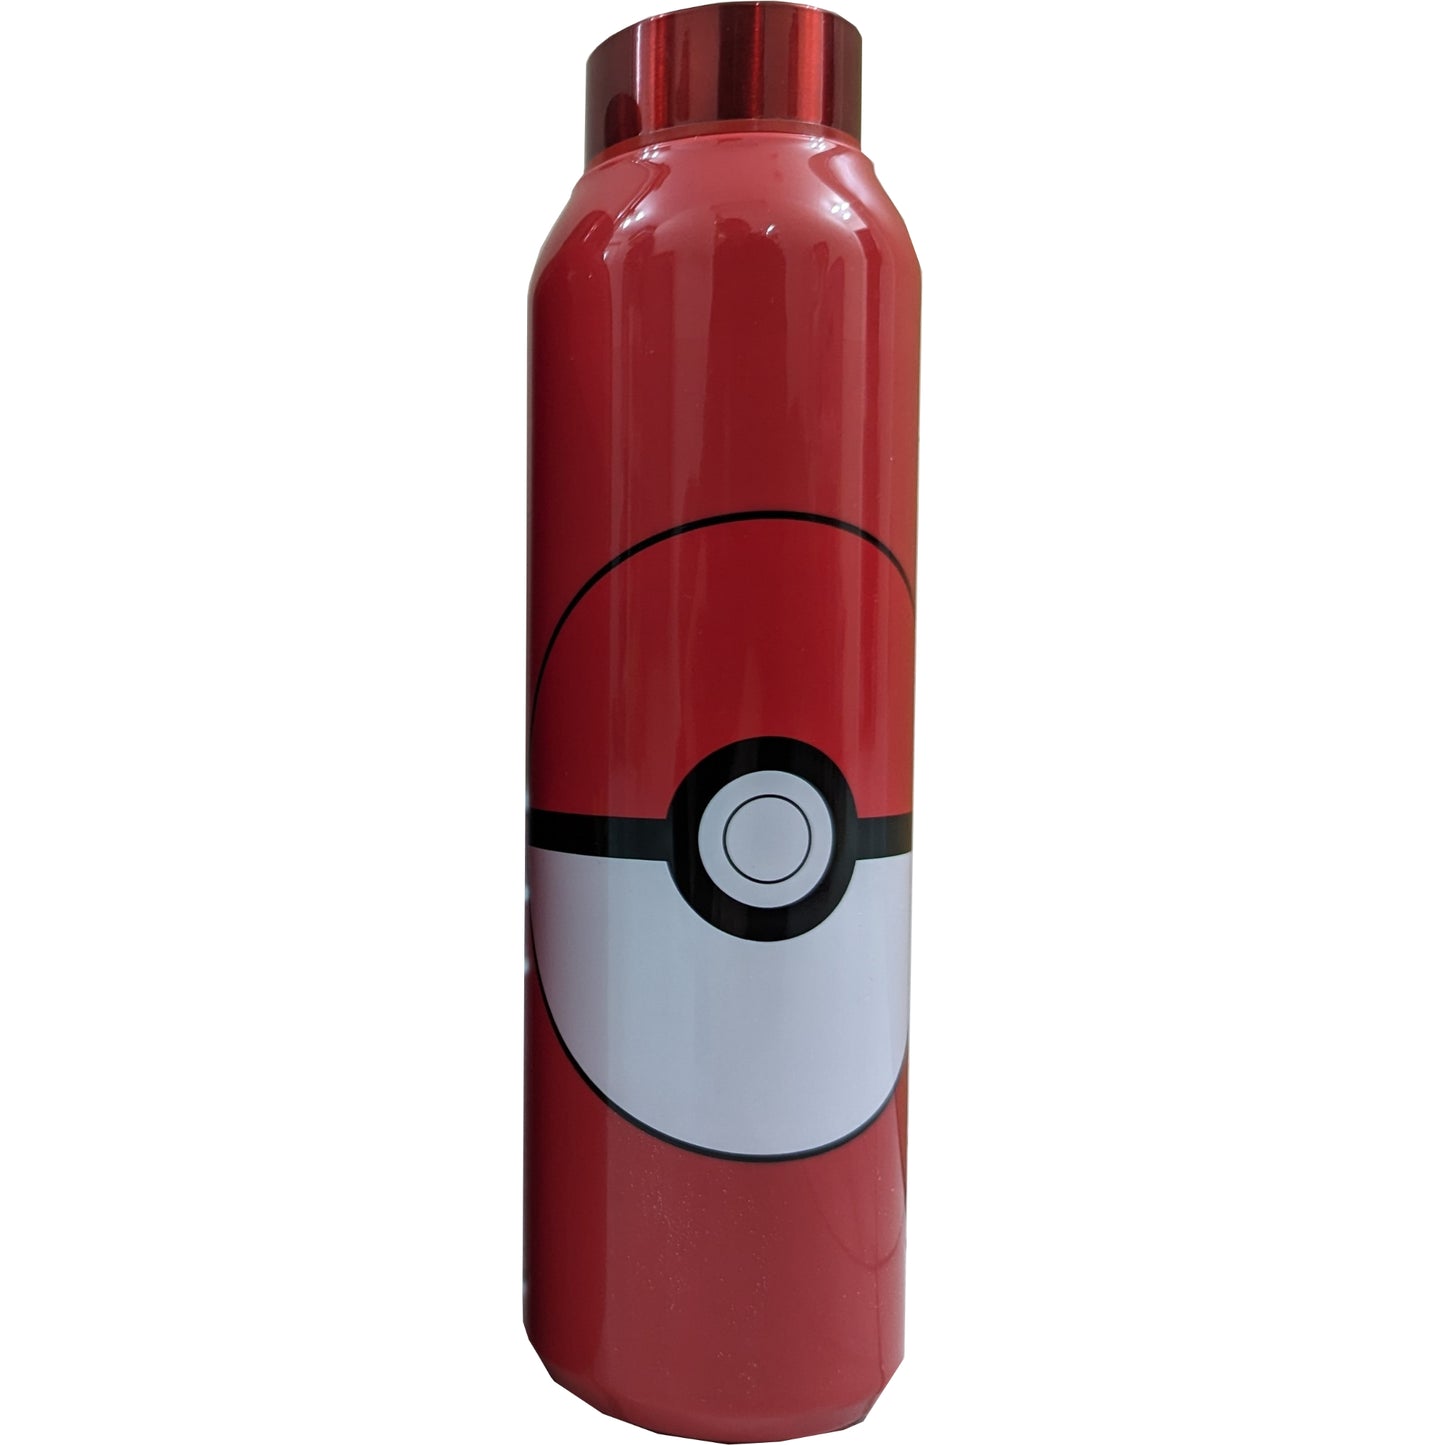 Pokemon Bottle